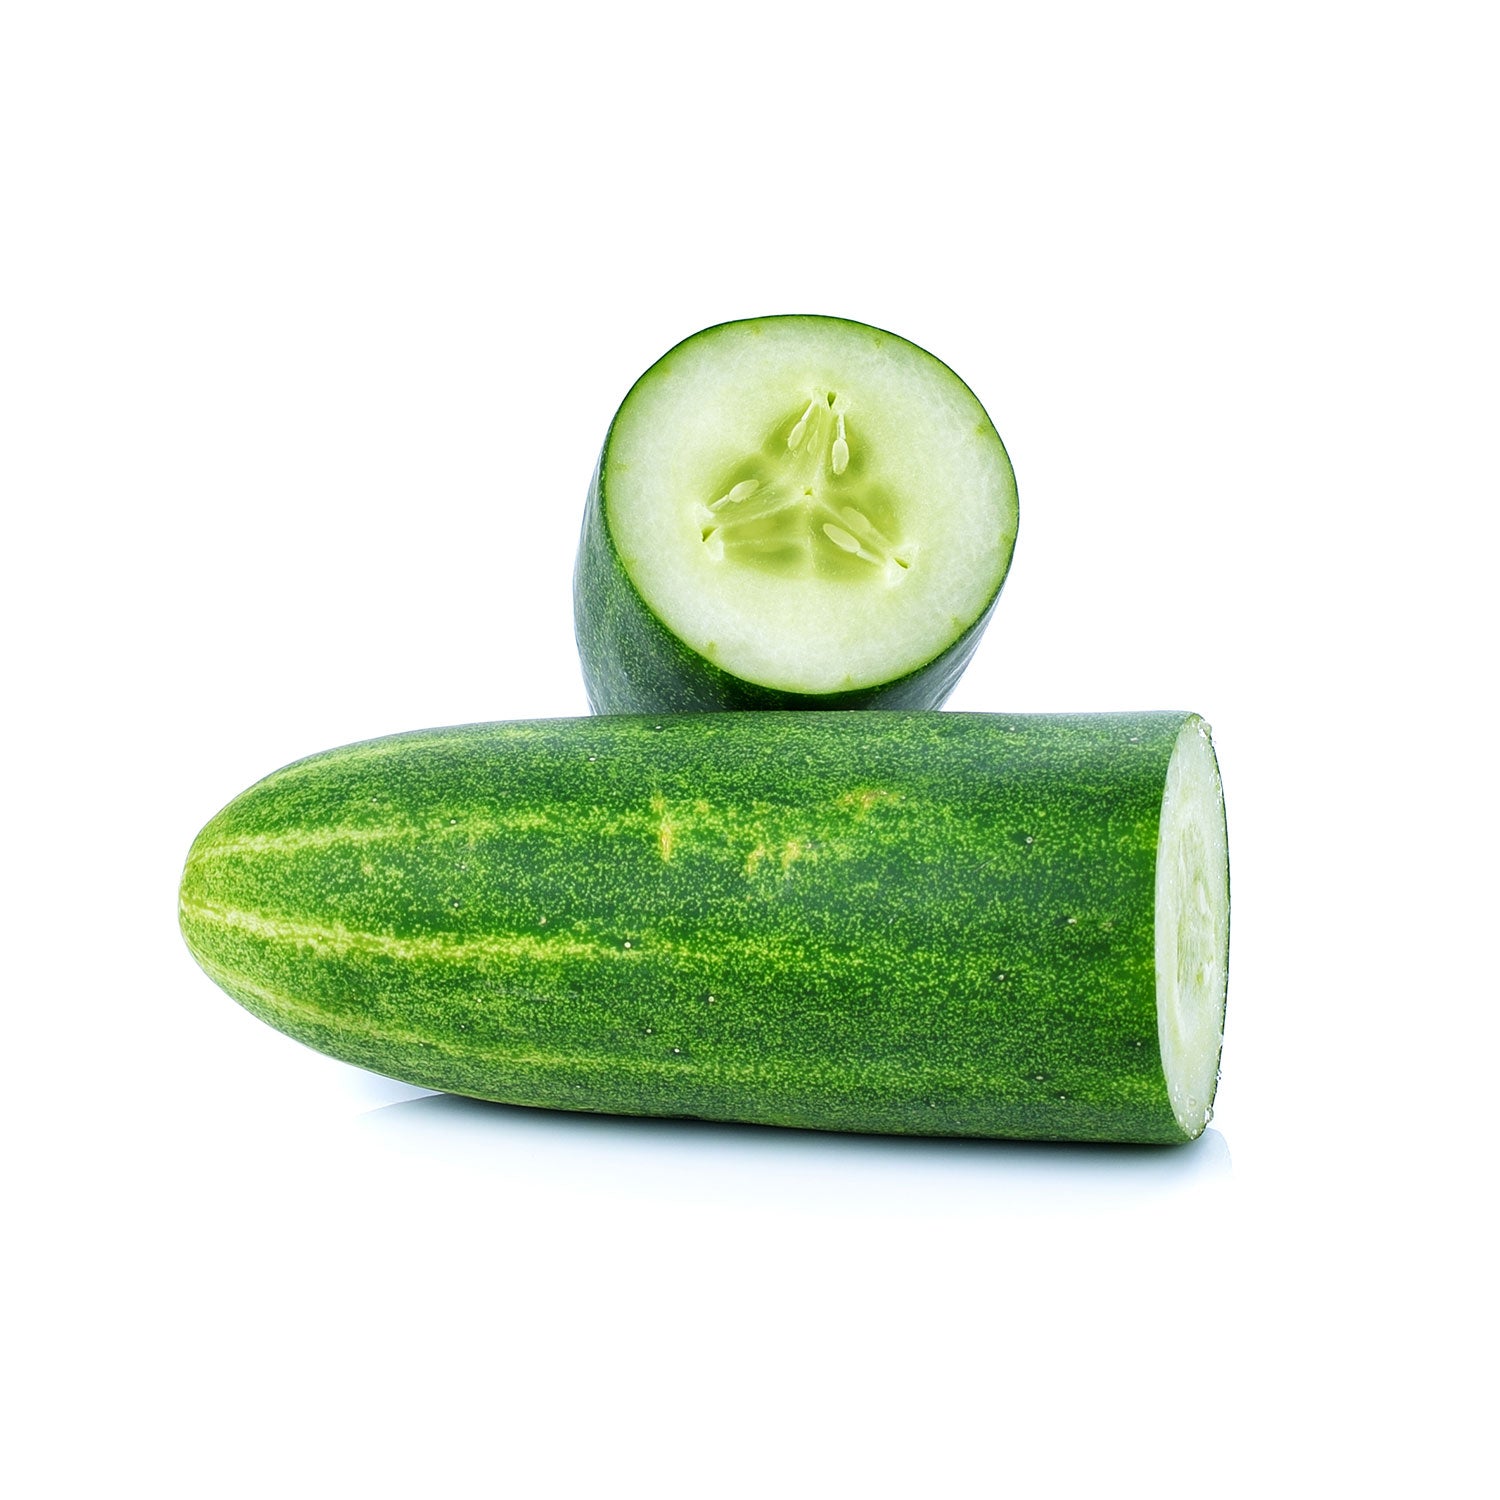 Fresh Organic Long English Cucumber, Each